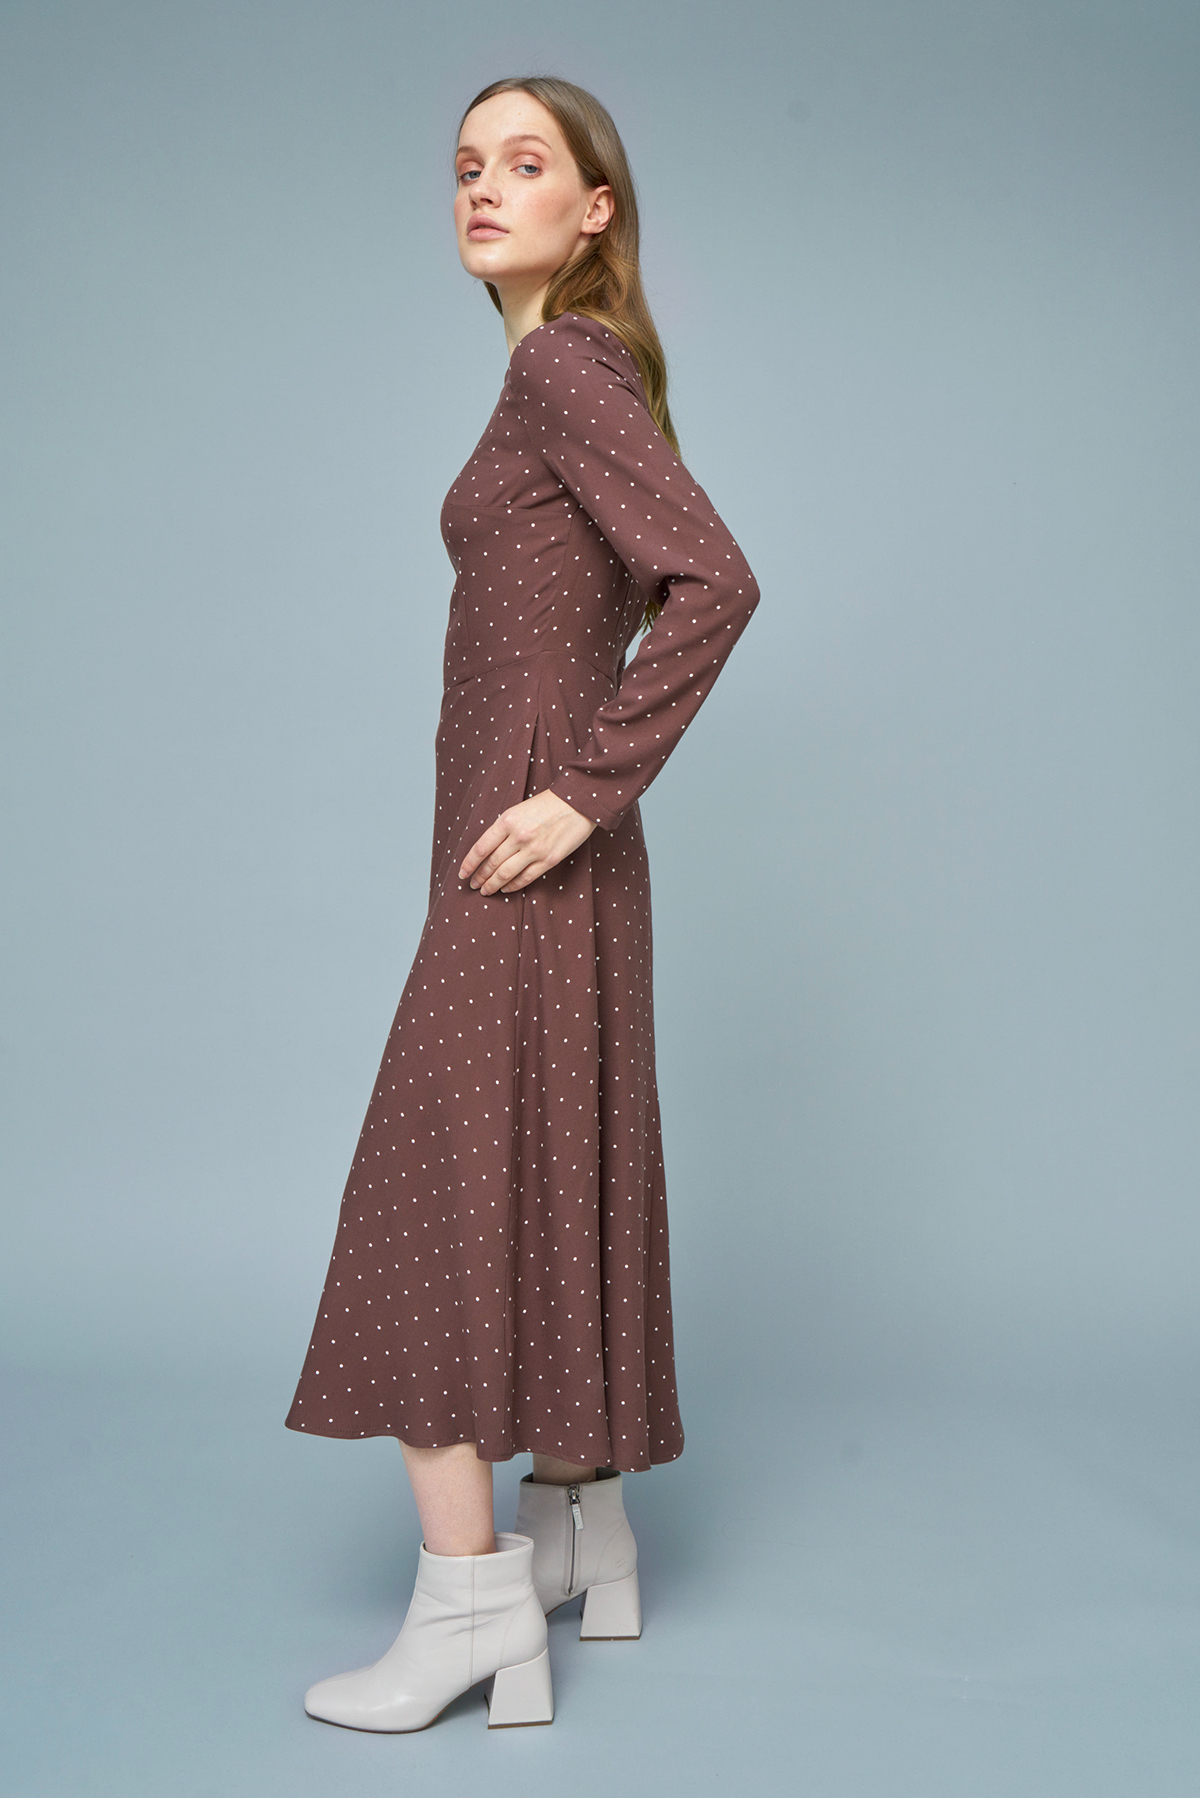 Brown midi dress with print, photo 5